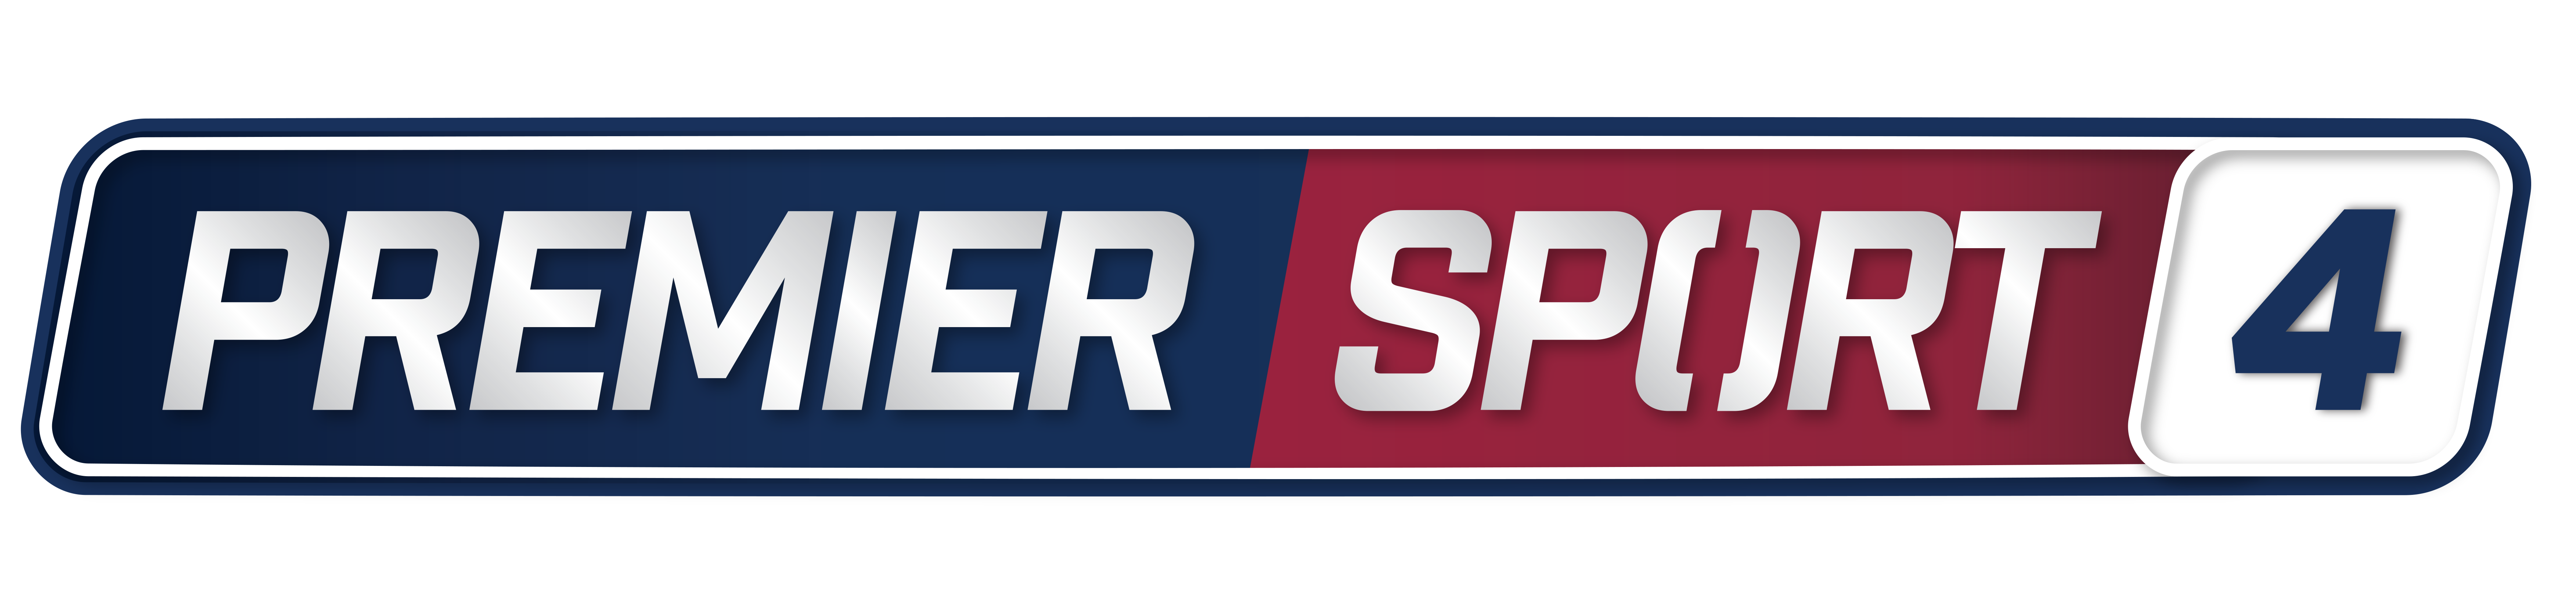 Premier Sport 4 - logo